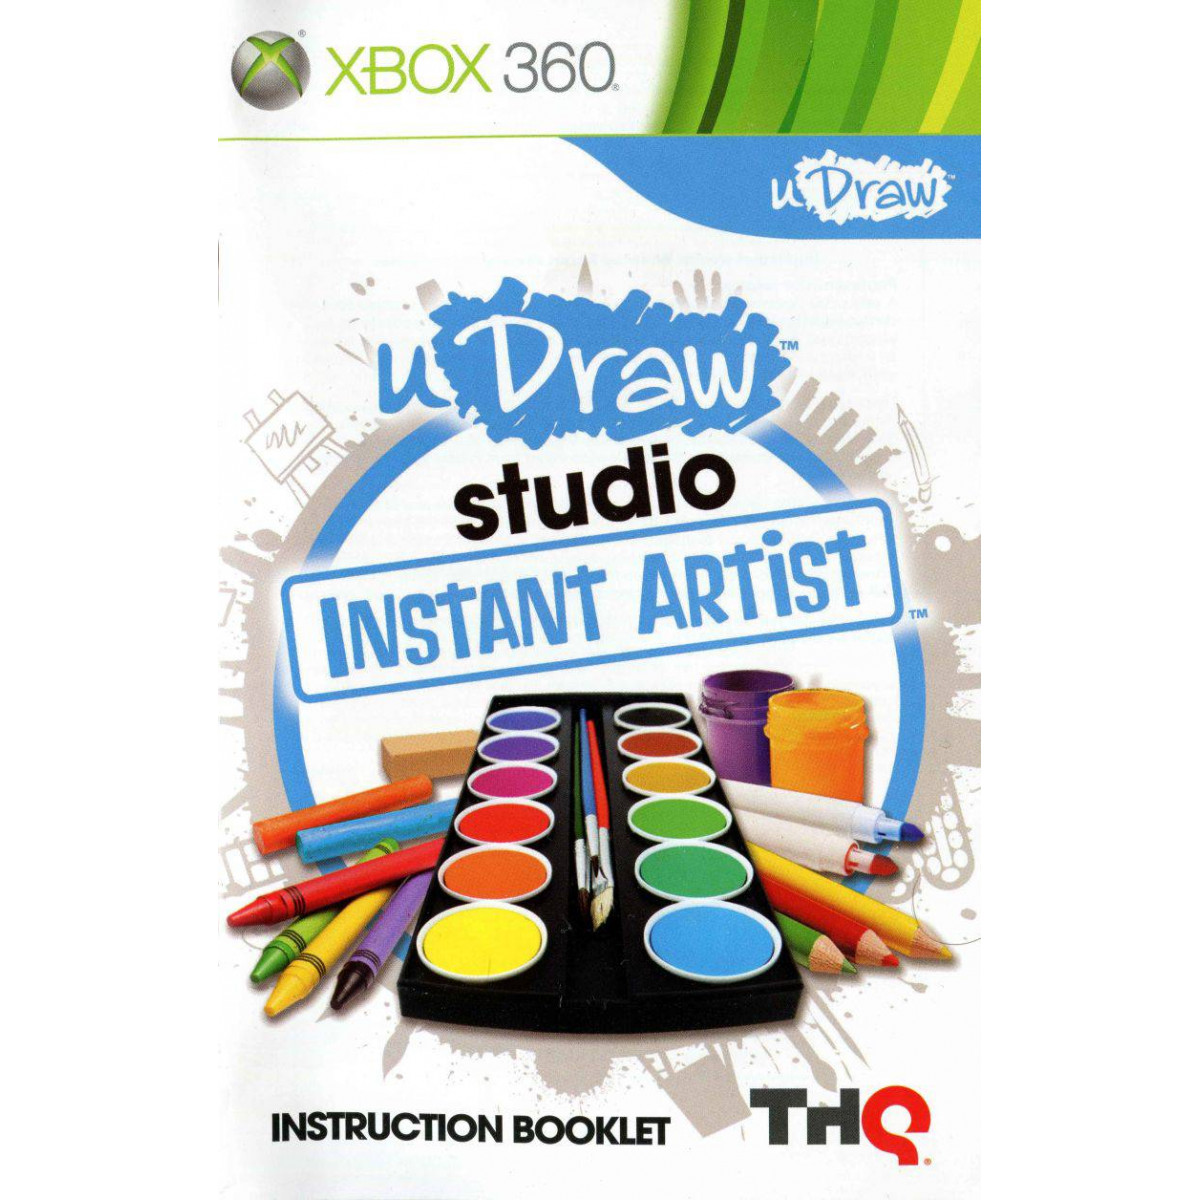 uDraw Studio Instant Artist (csak játékszoftver)